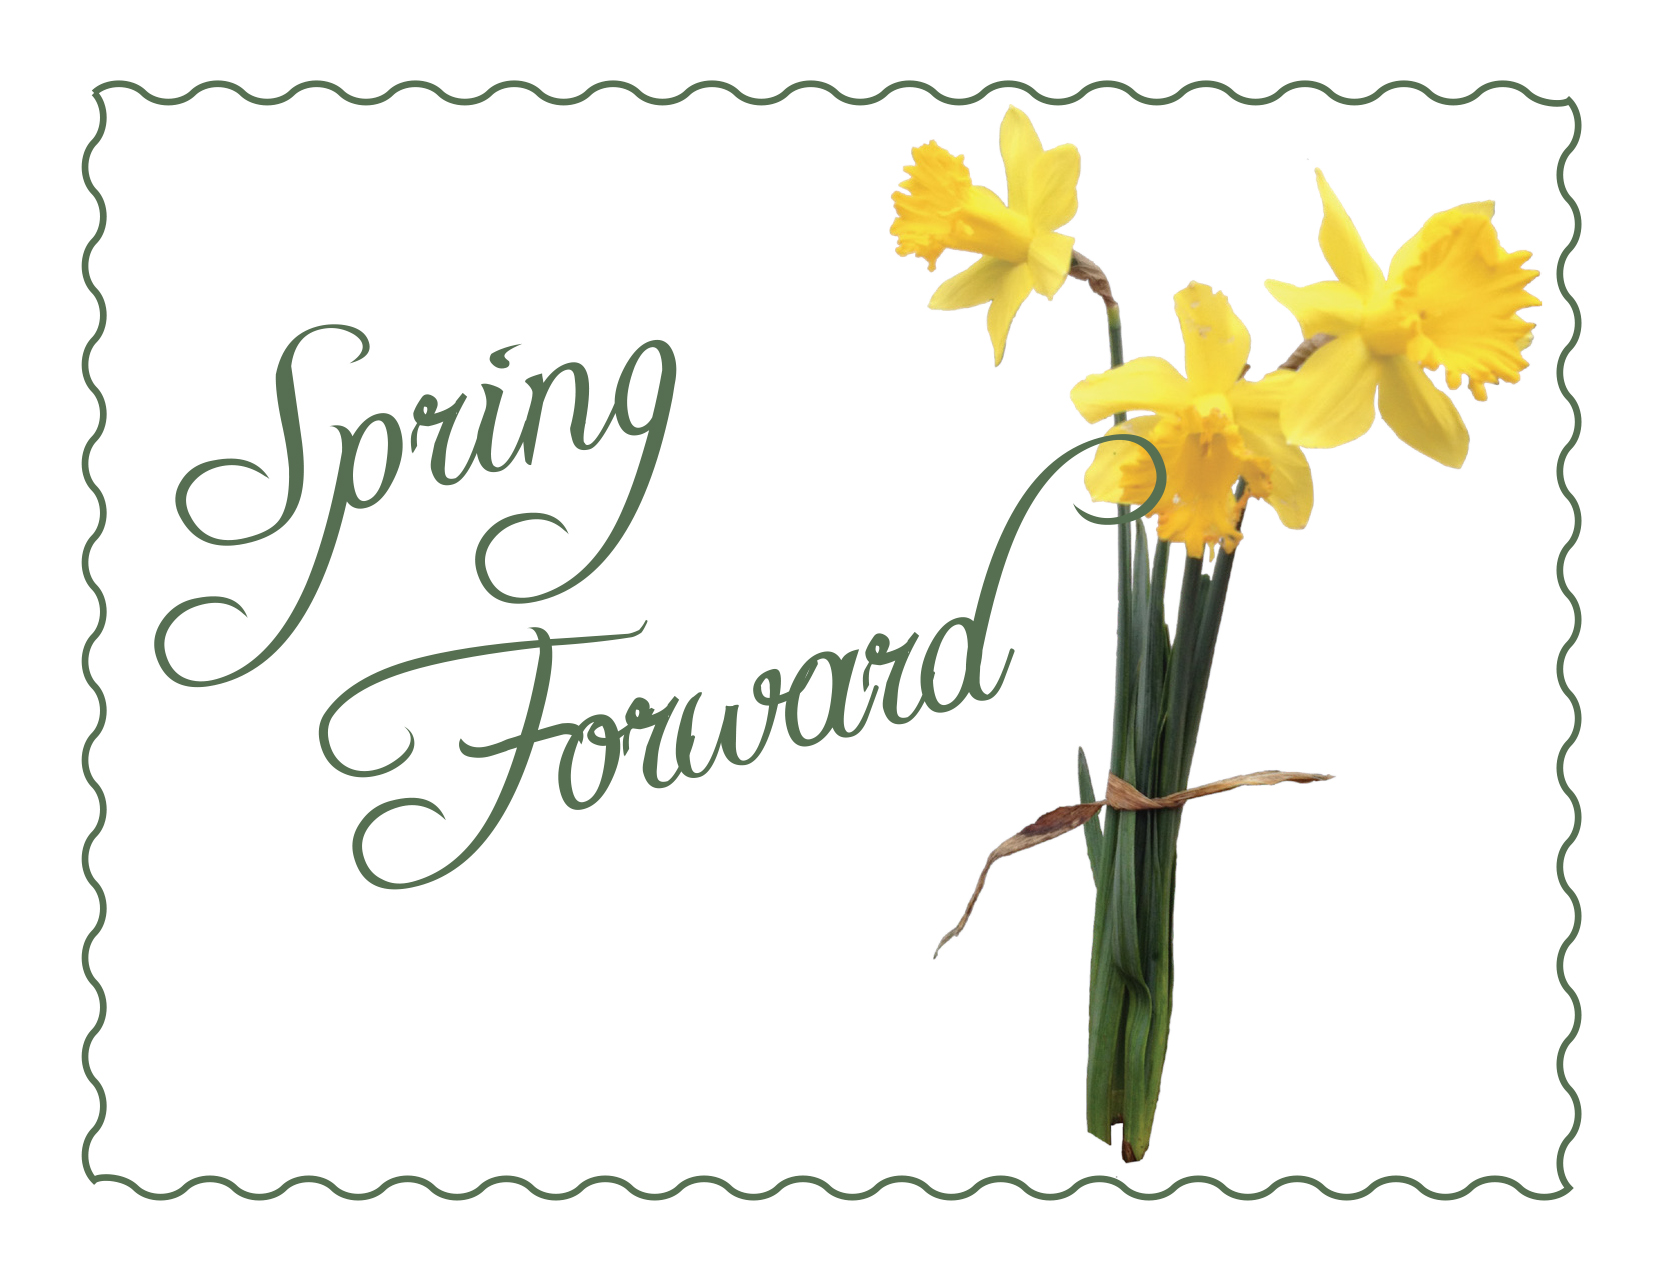 Poster for Spring Forward